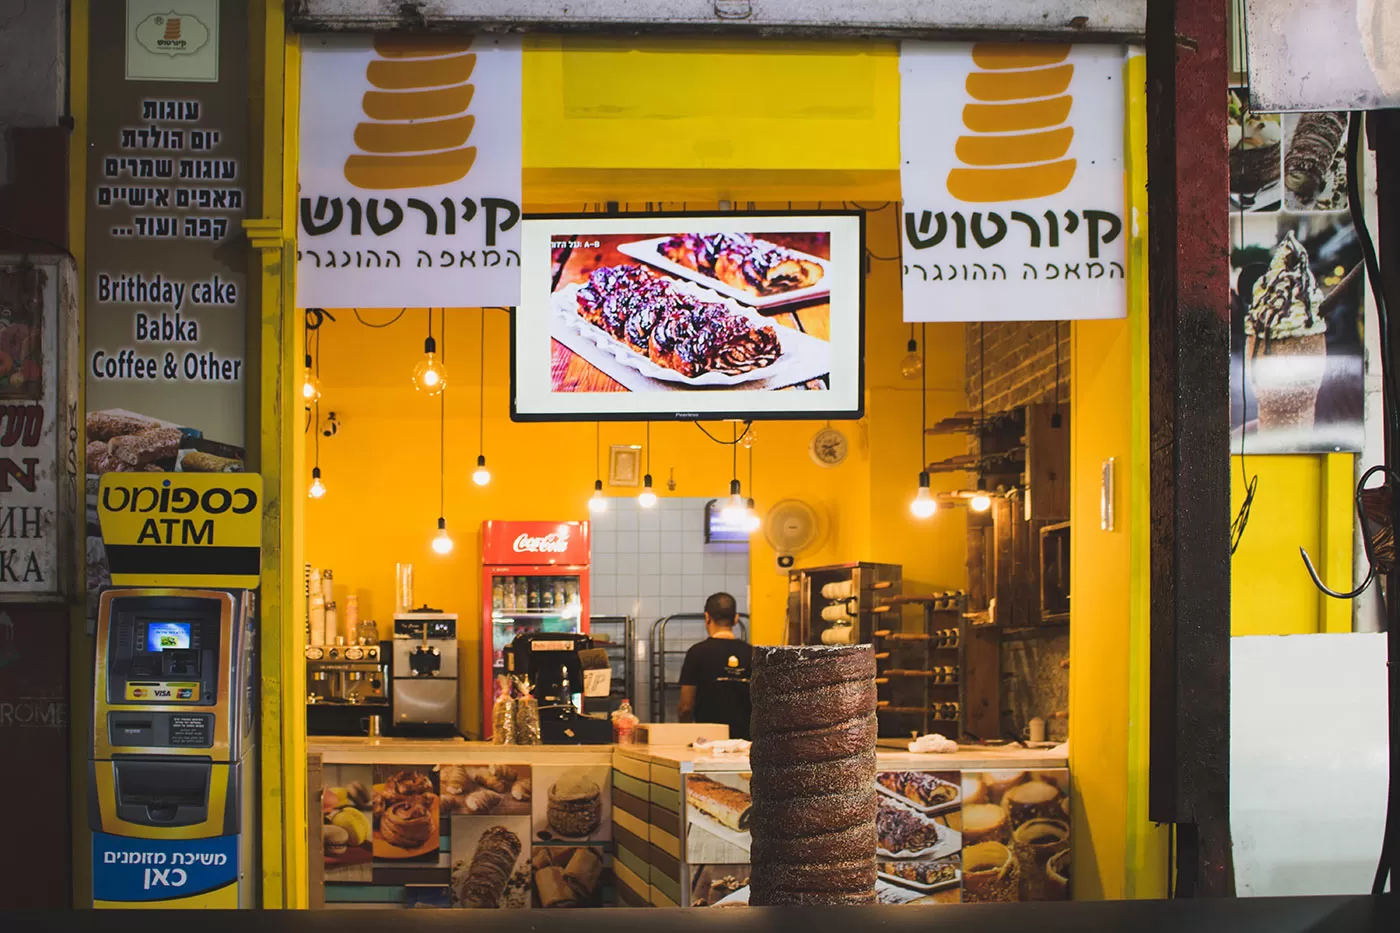 100 Common Hebrew Phrases - Shopfront with Hebrew Signage